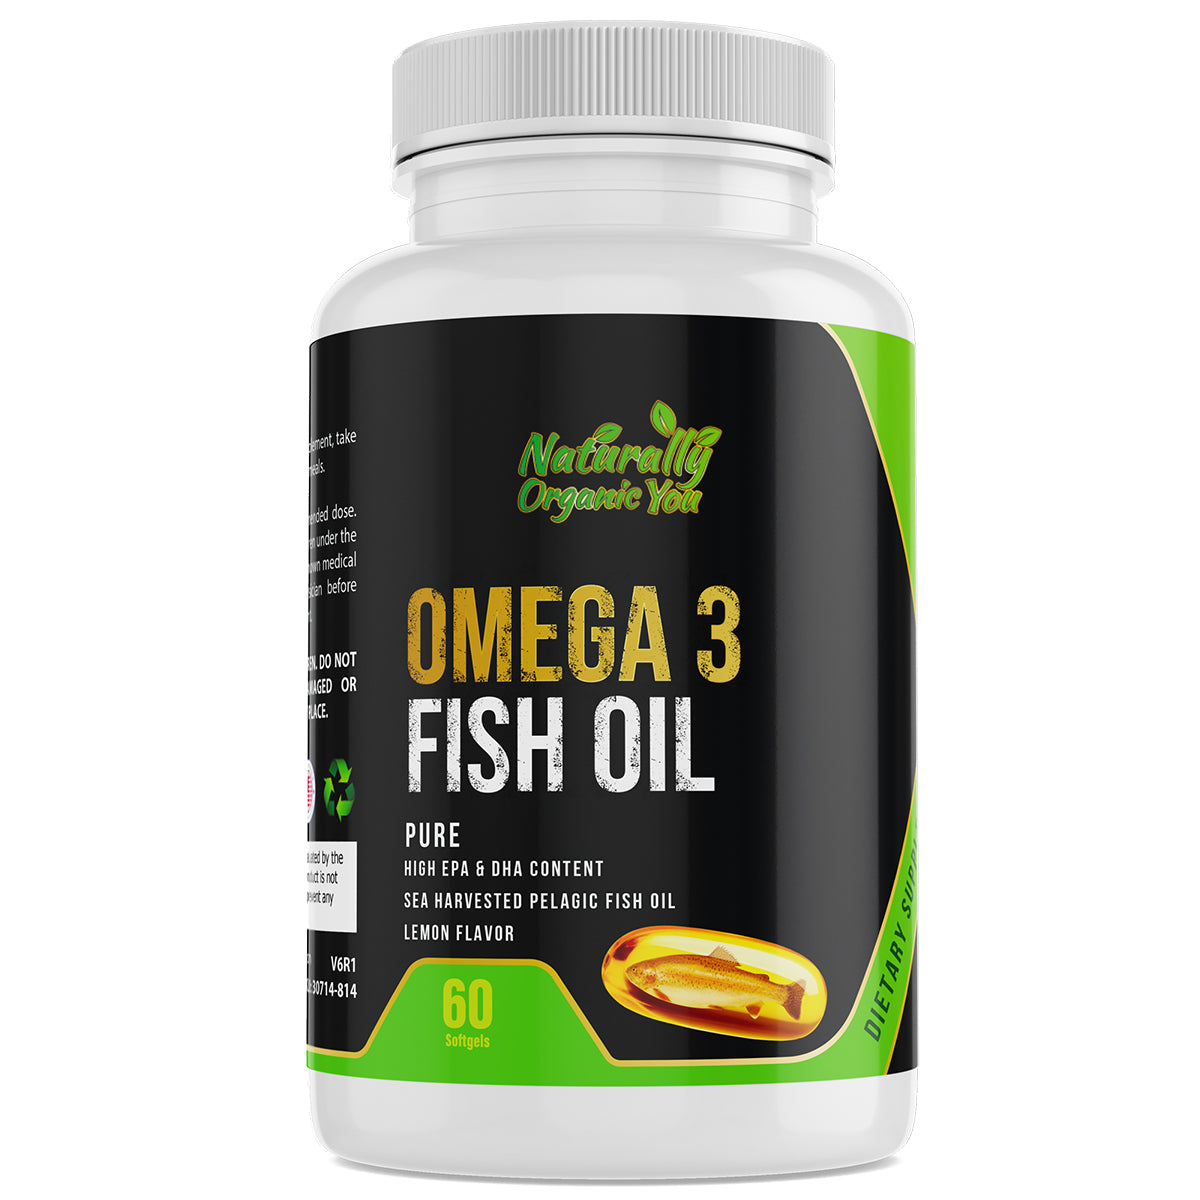 OMEGA 3 Fish Oil